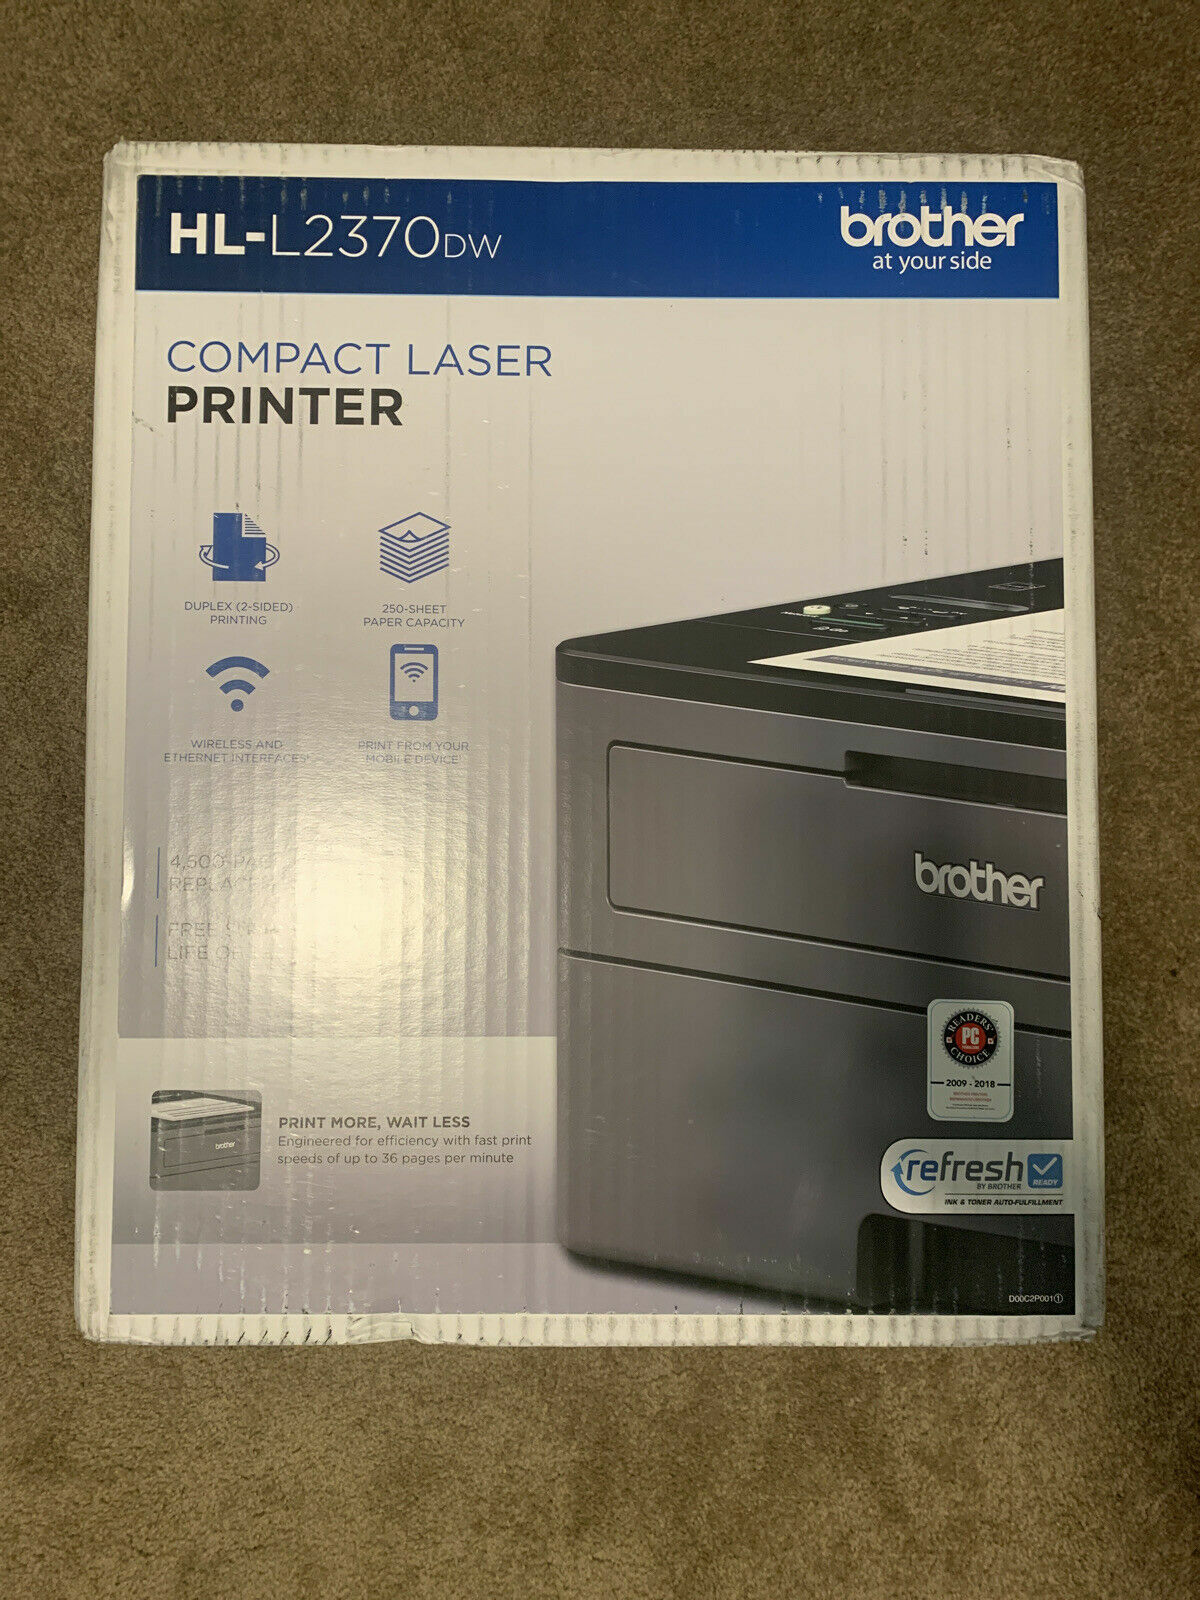 NEW Brother HL-L2370DW Wireless Monochrome Laser Printer - Black